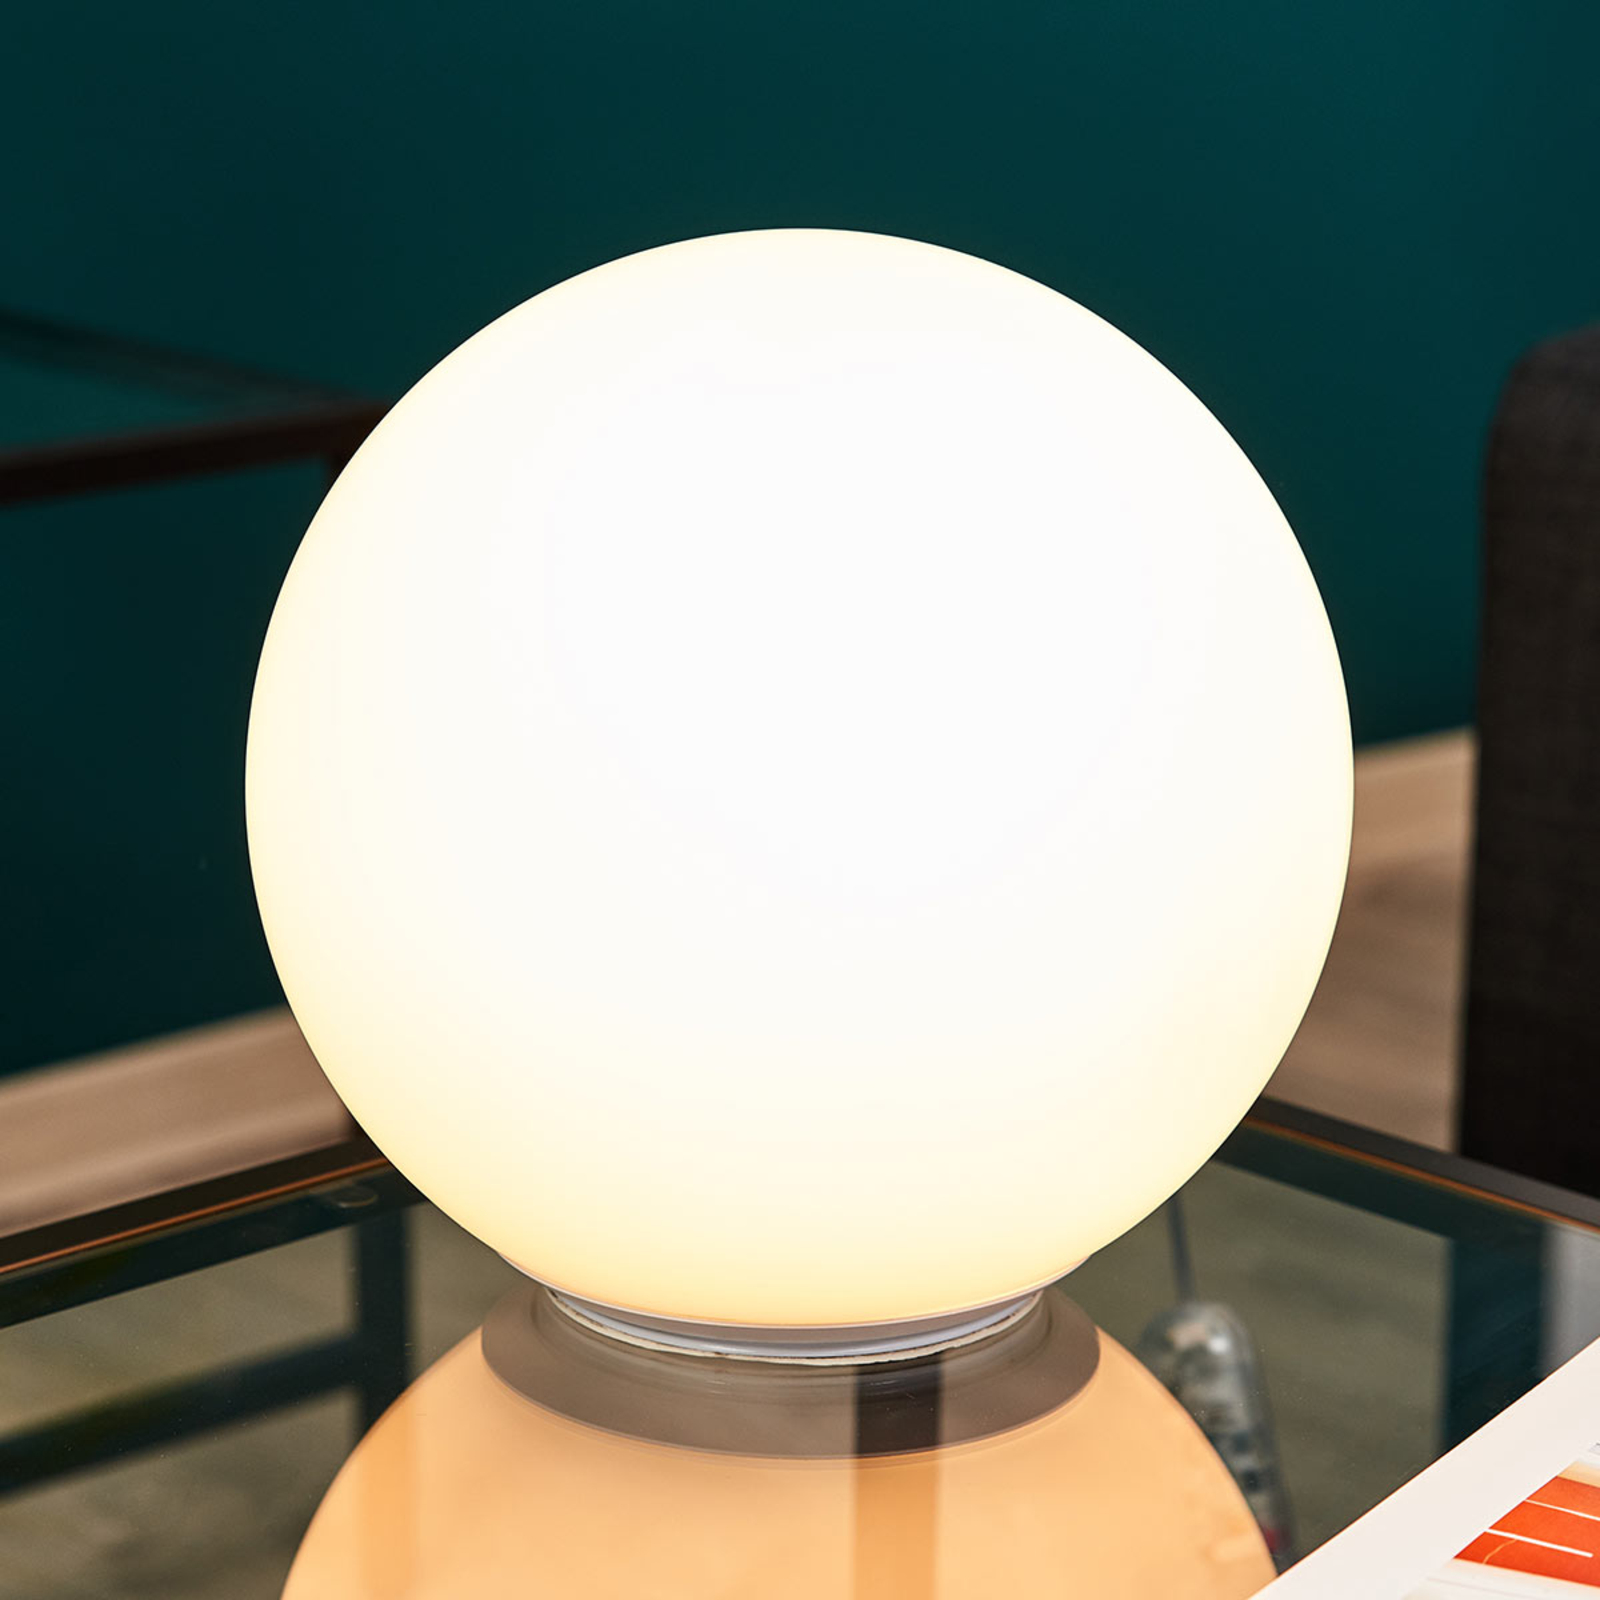 Dioscuri glass table lamp, spherical 25 cm